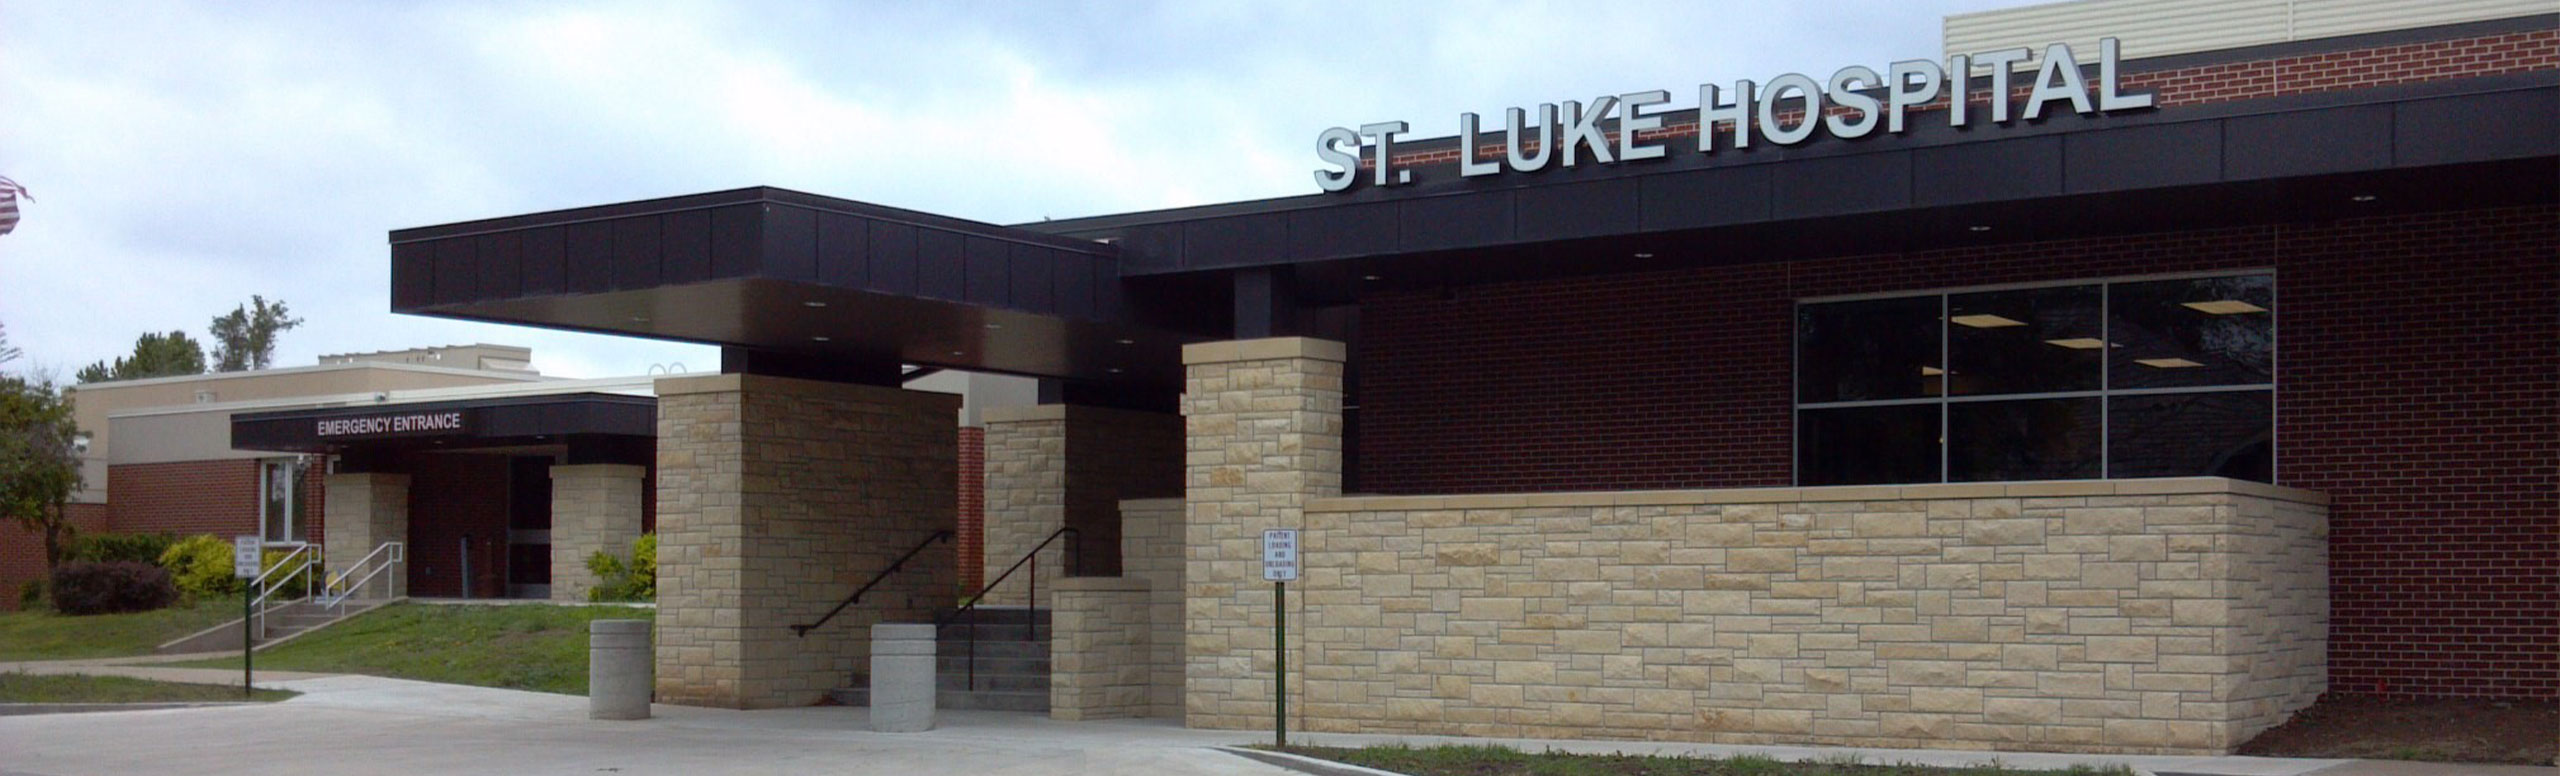 Picture of St. Luke Hospital